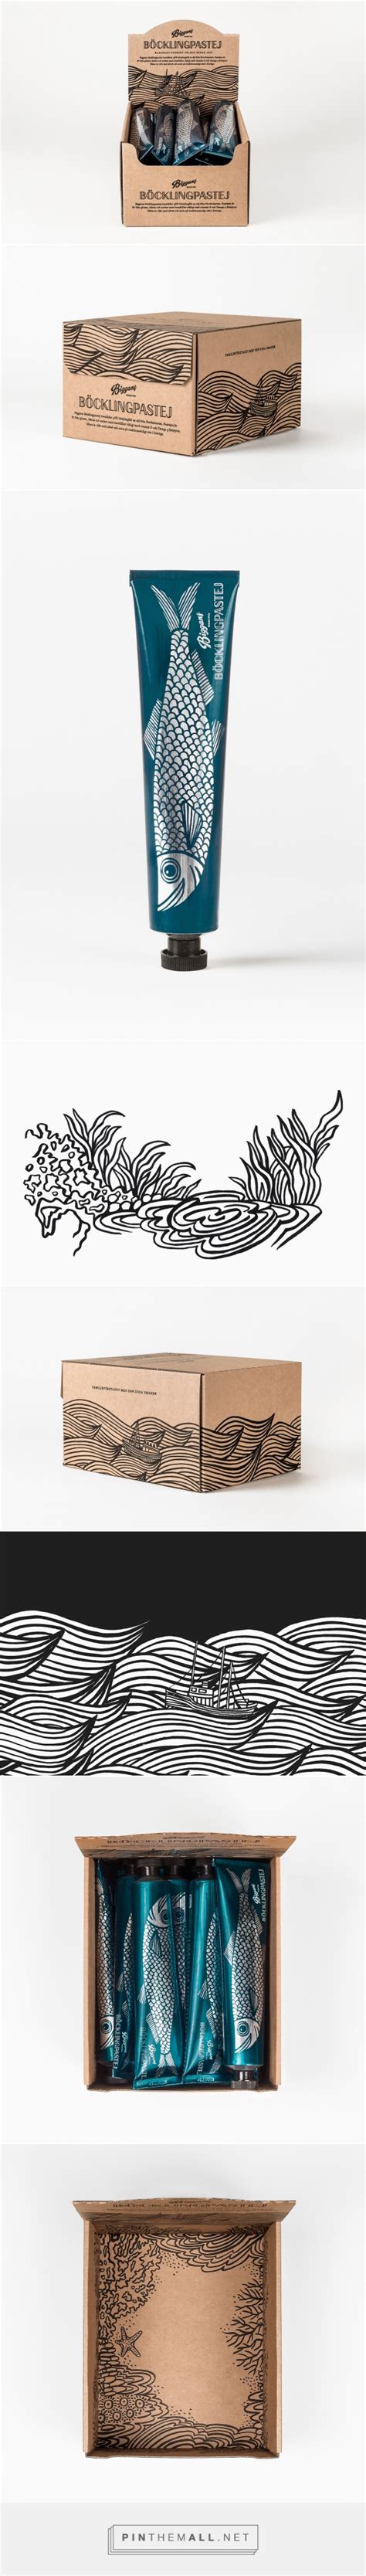 New Packaging For Biggans Böcklingpastej By Bedow — Bpando Created Via